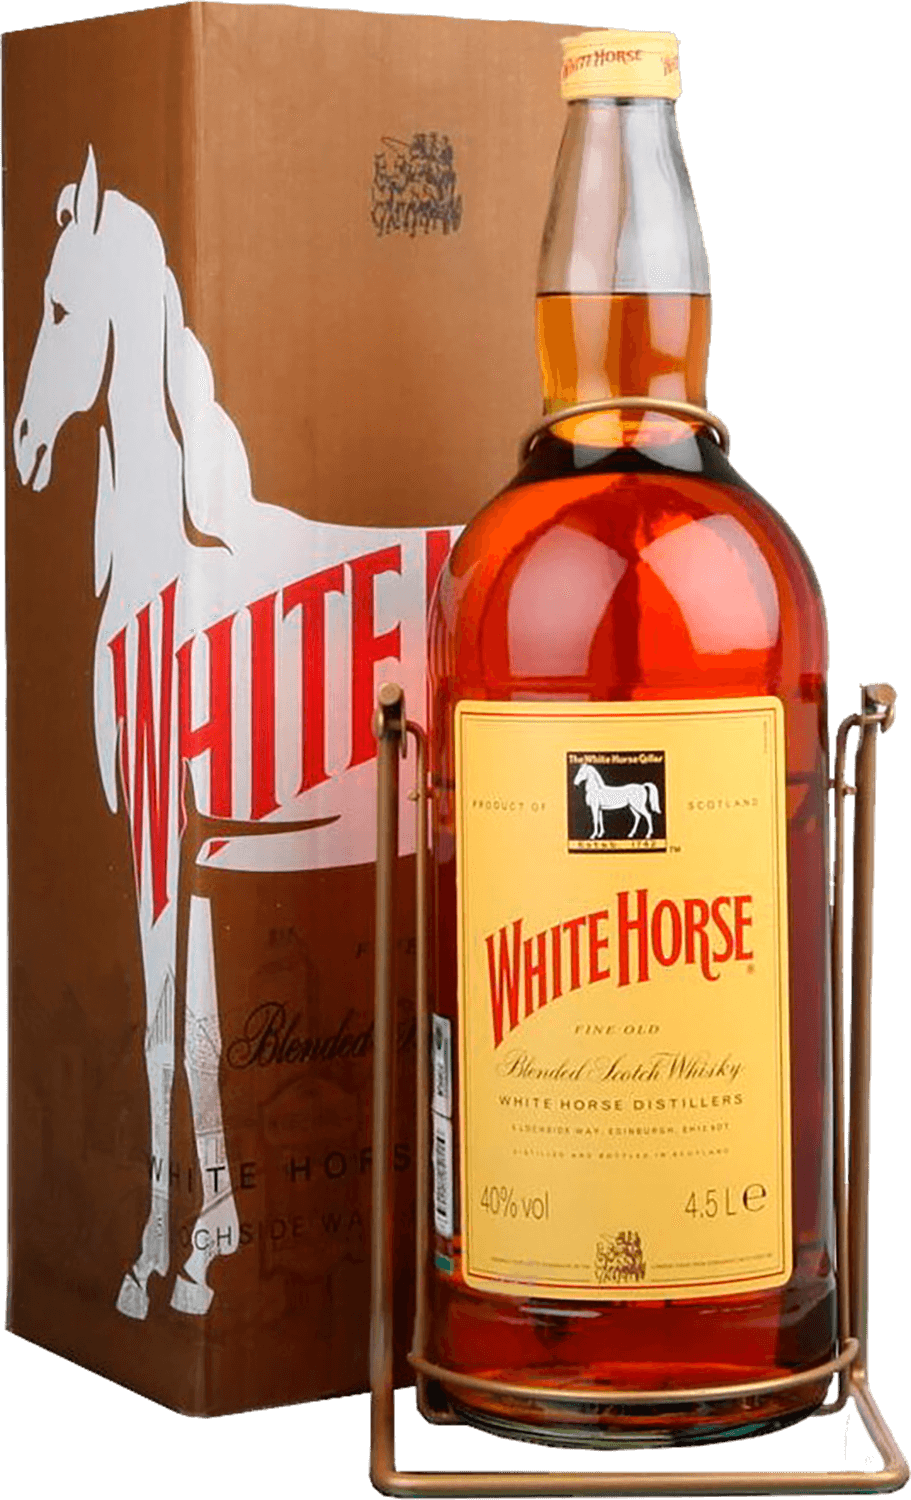 White Horse Blended Scotch Whisky (gift box) arran robert burns blended scotch whisky gift box